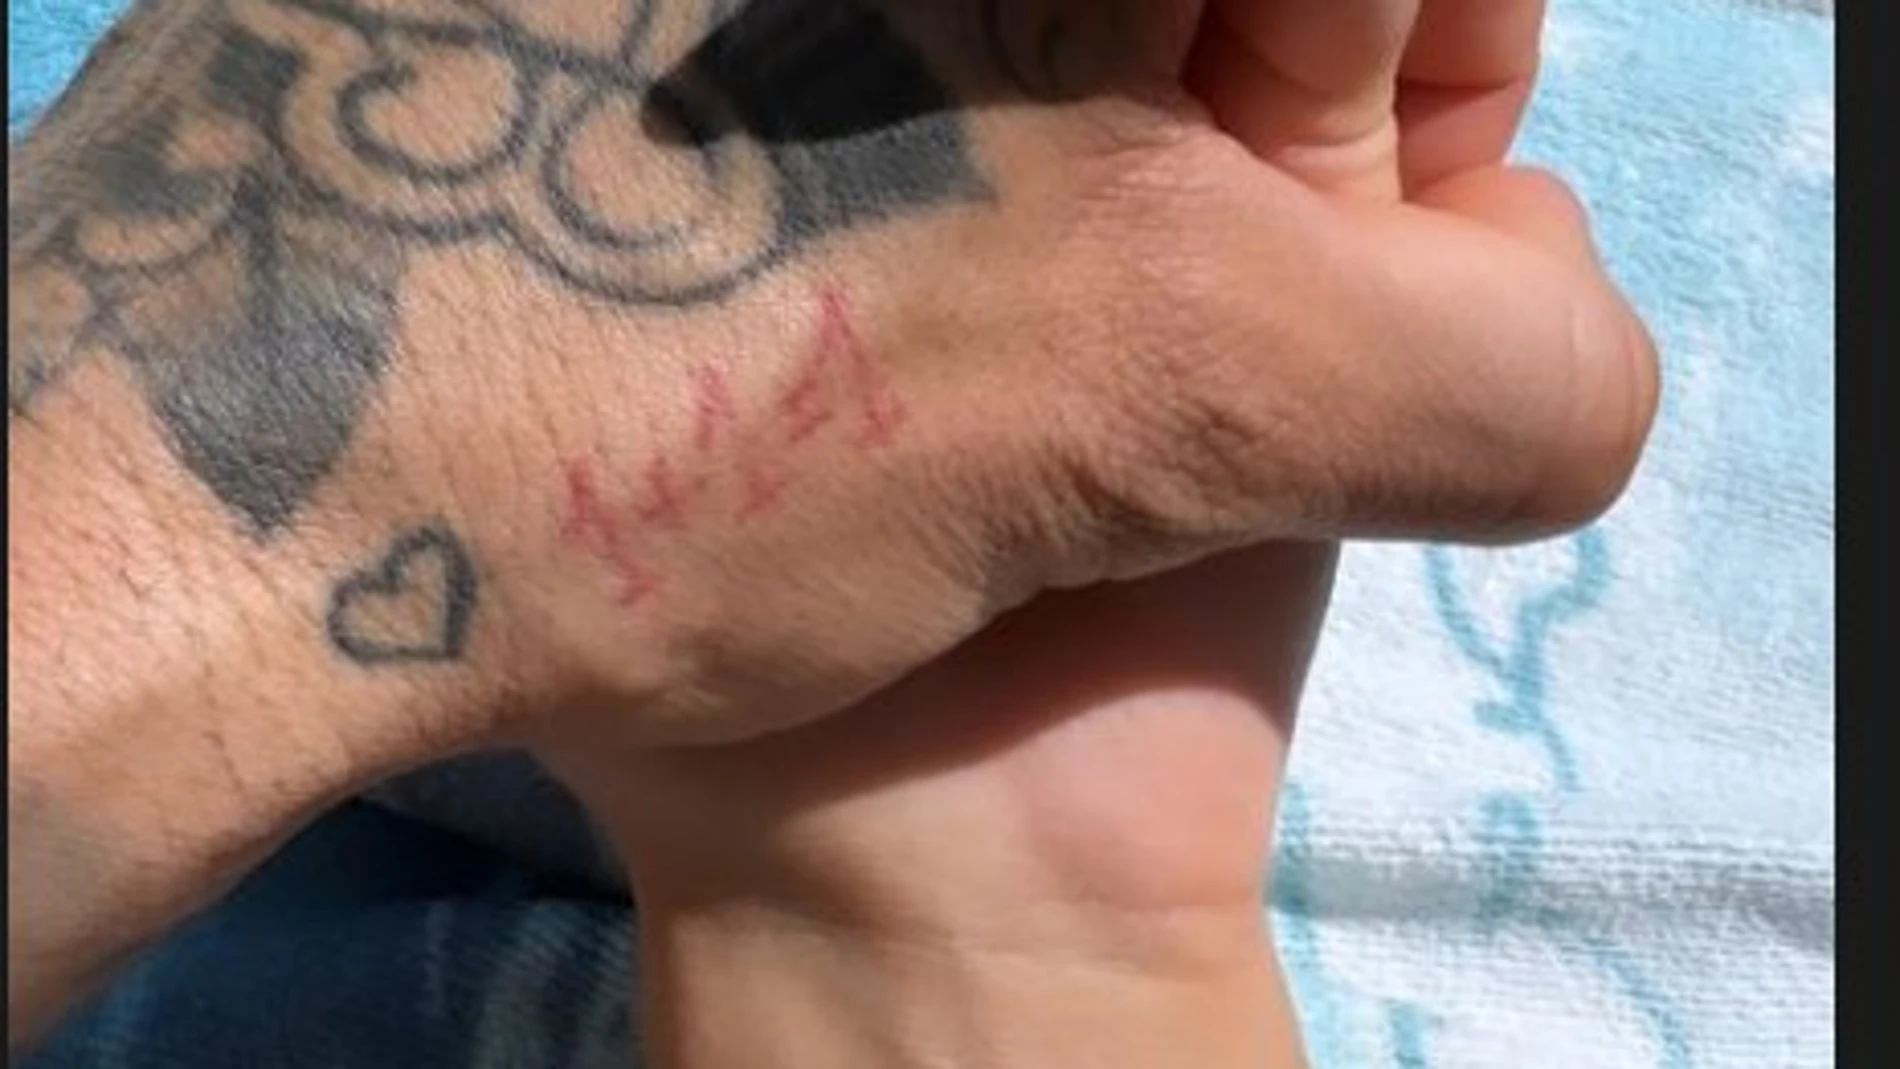 El mensaje en el tatuaje de la mano de Dani Alves